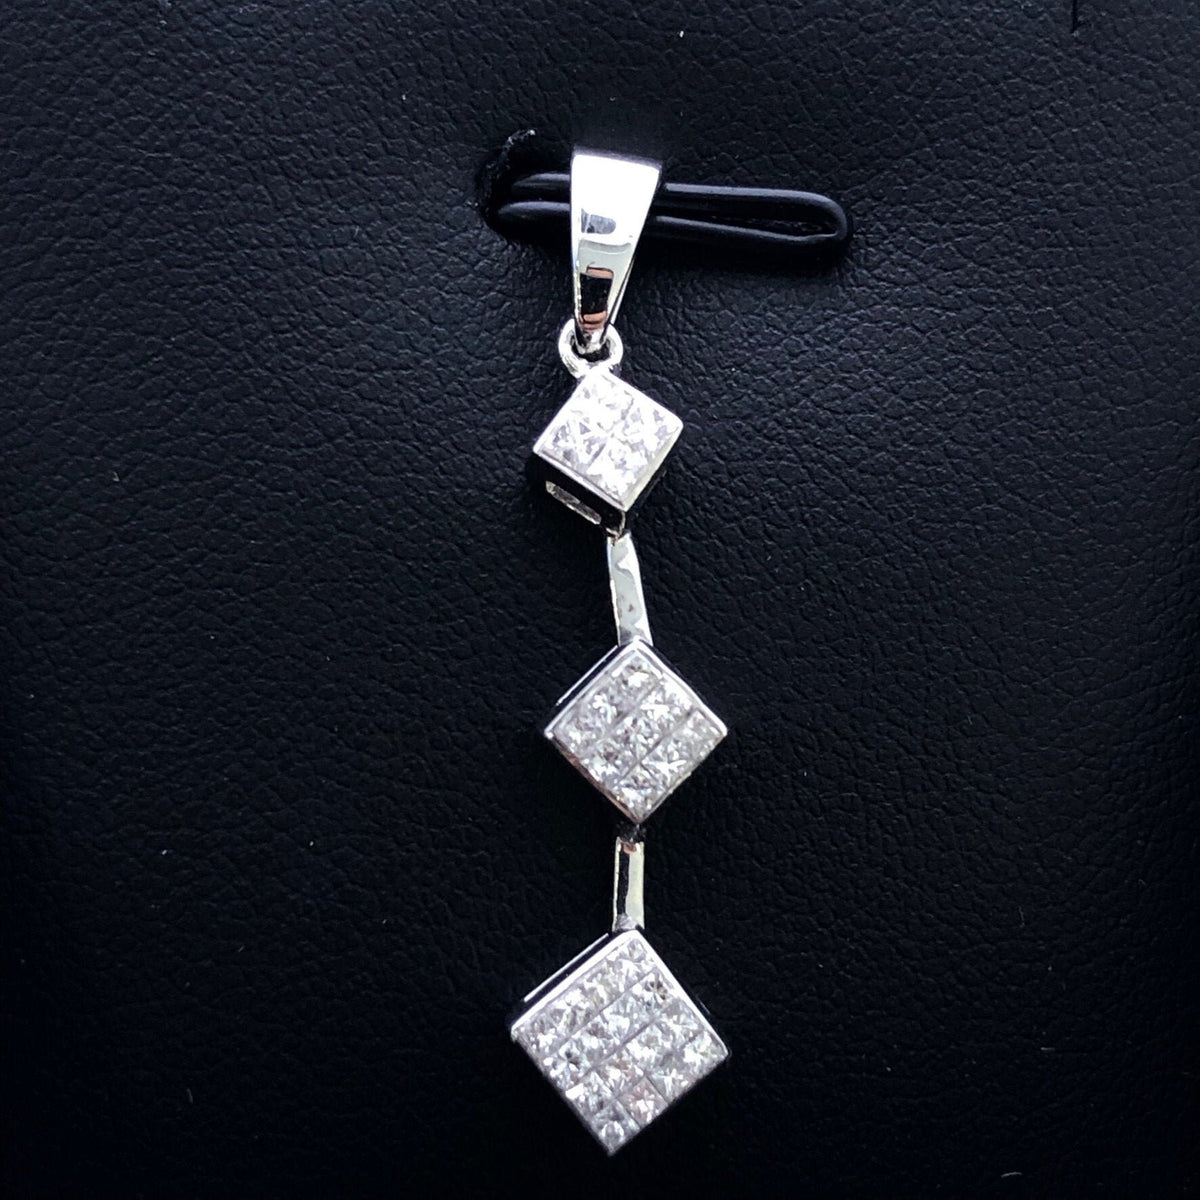 LIV 14k White Gold & Diamonds G/VS1 Princess Cut Invisible Design Pendant Necklace